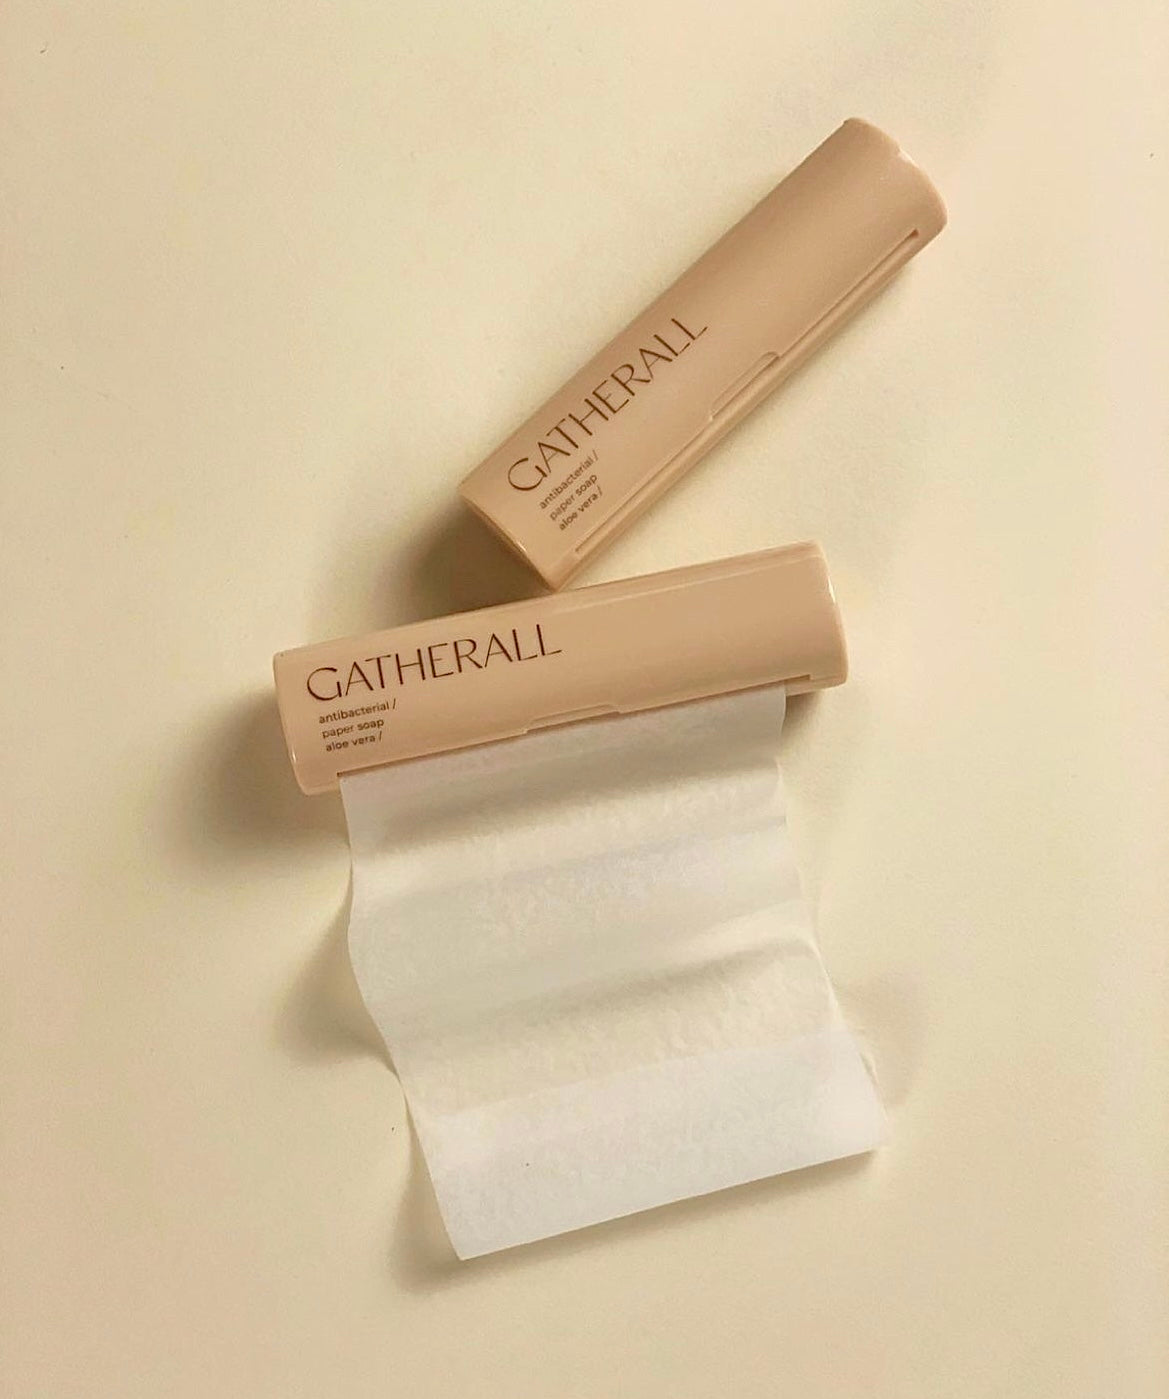 gatherall anti-bac paper soap